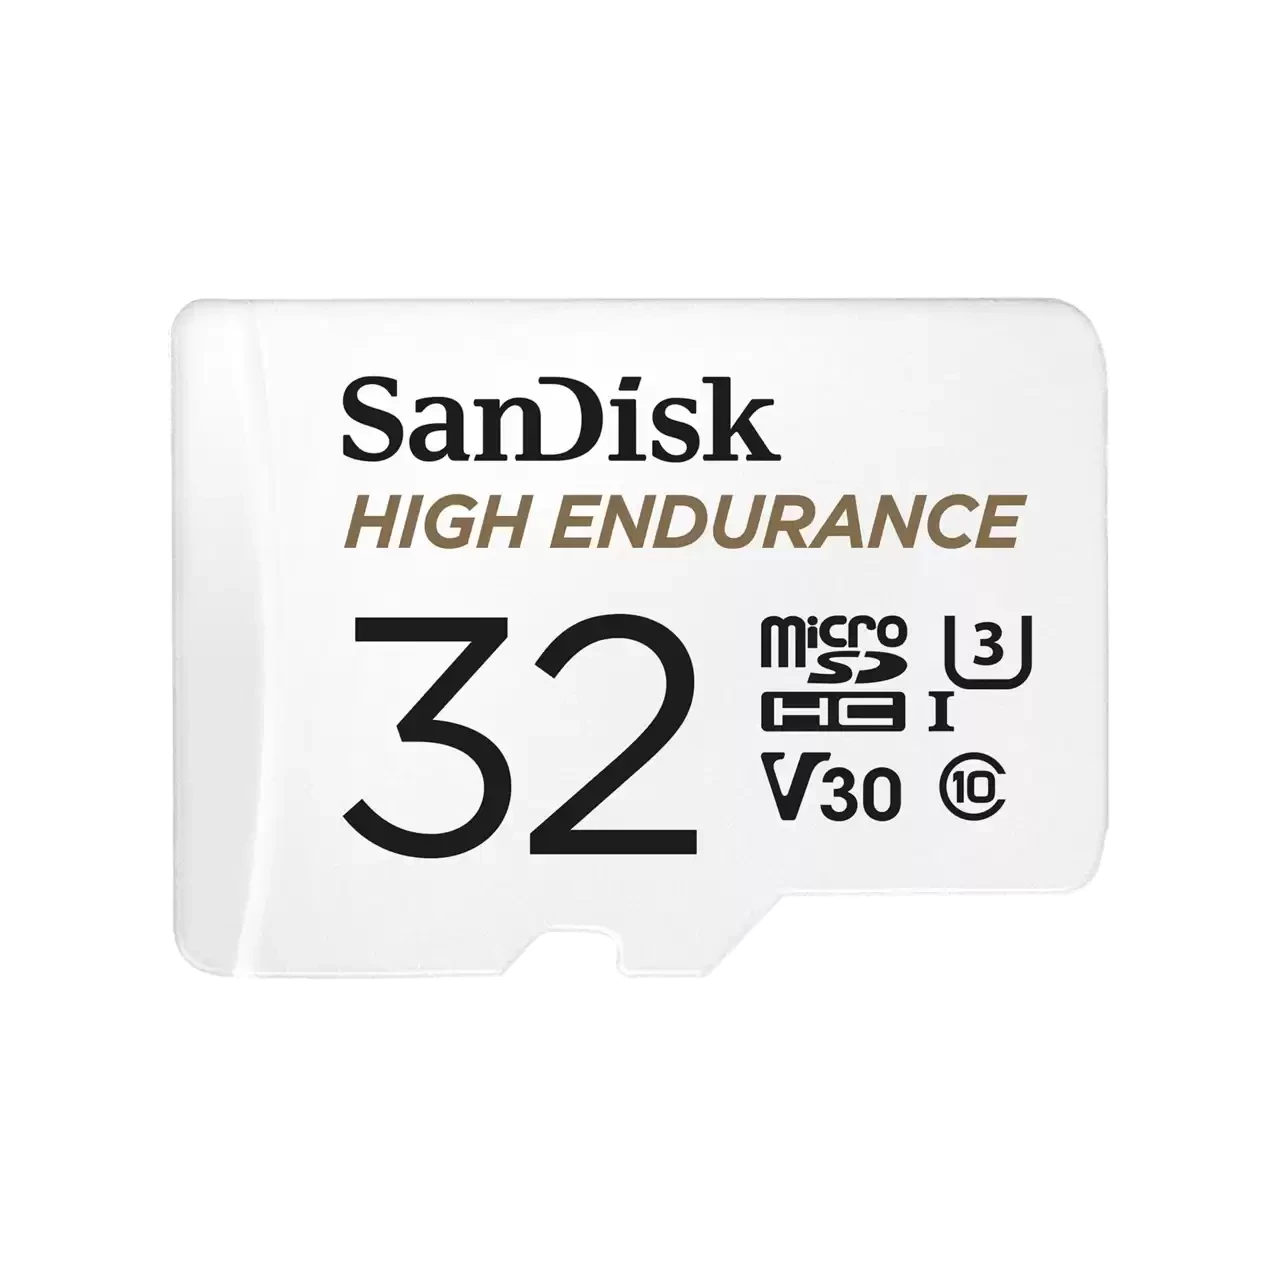 Sandisk High Endurance 32Gb 高耐寫度 MicroSDHC UHS-I 記憶卡